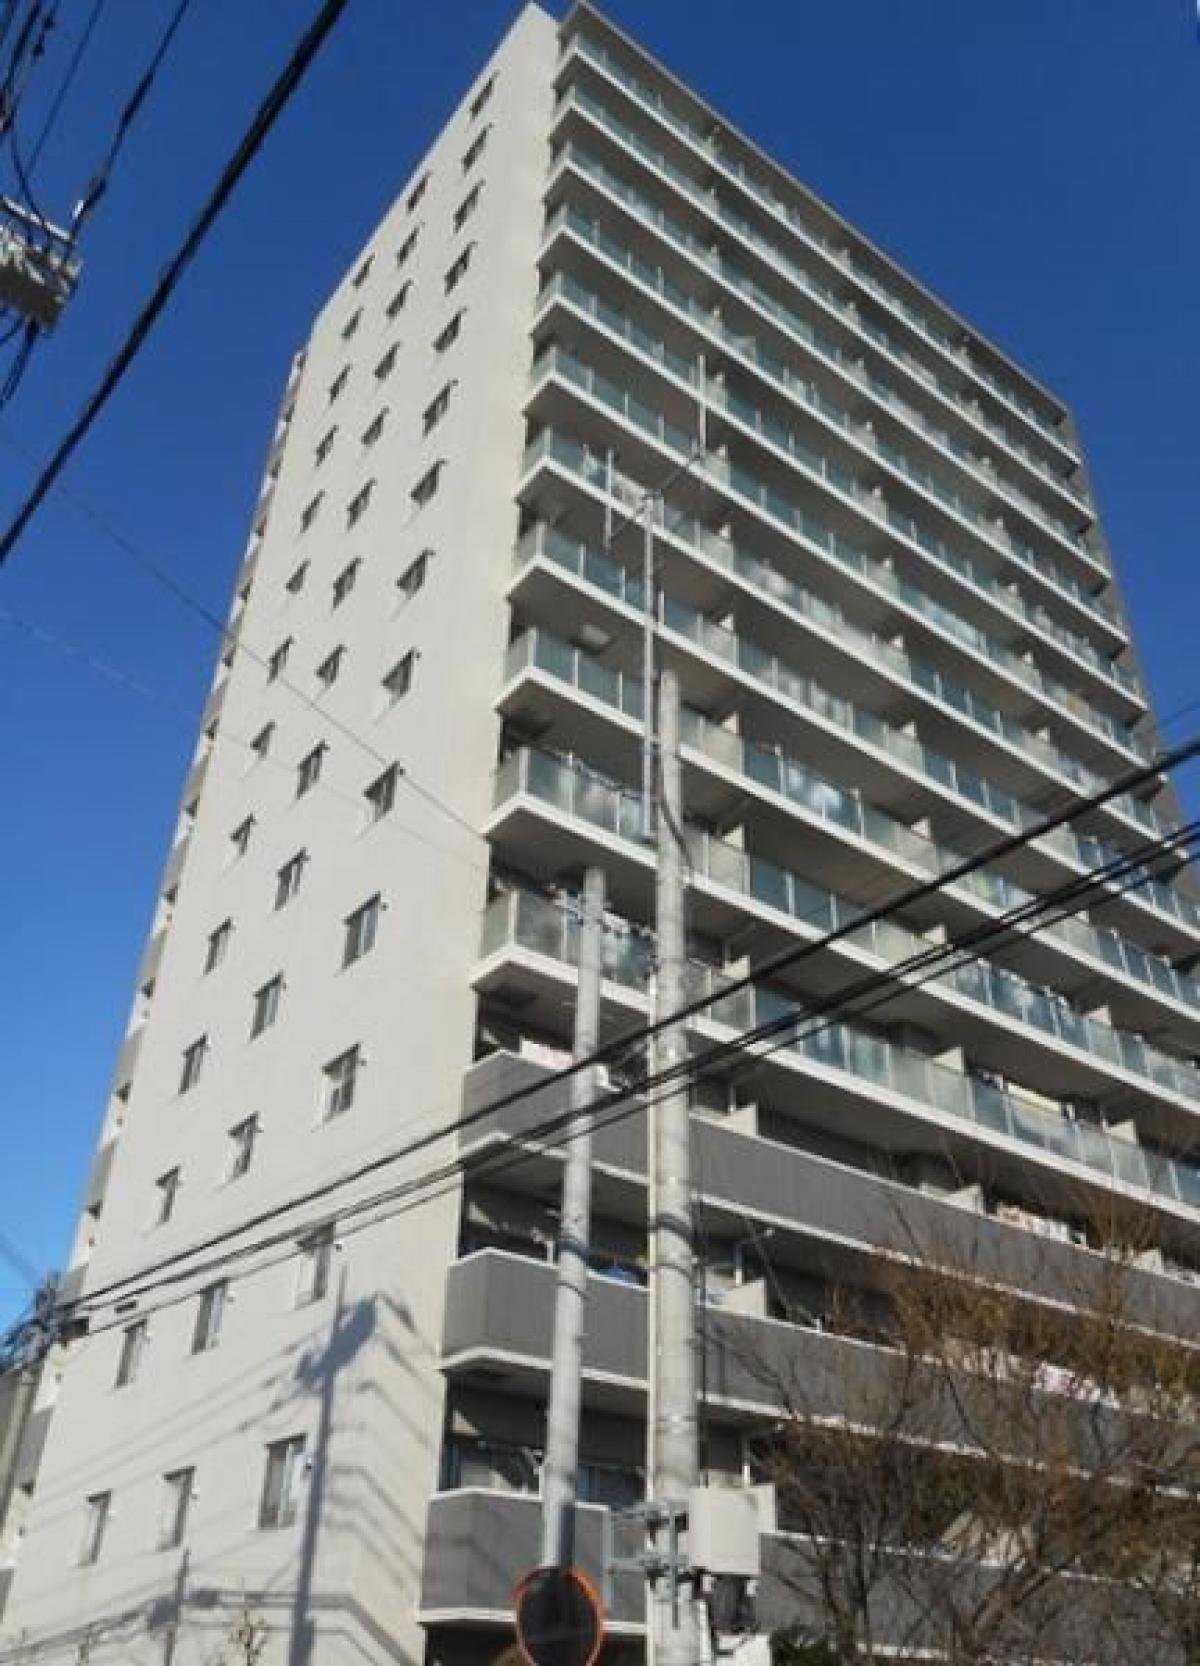 Picture of Apartment For Sale in Tsurugashima Shi, Saitama, Japan